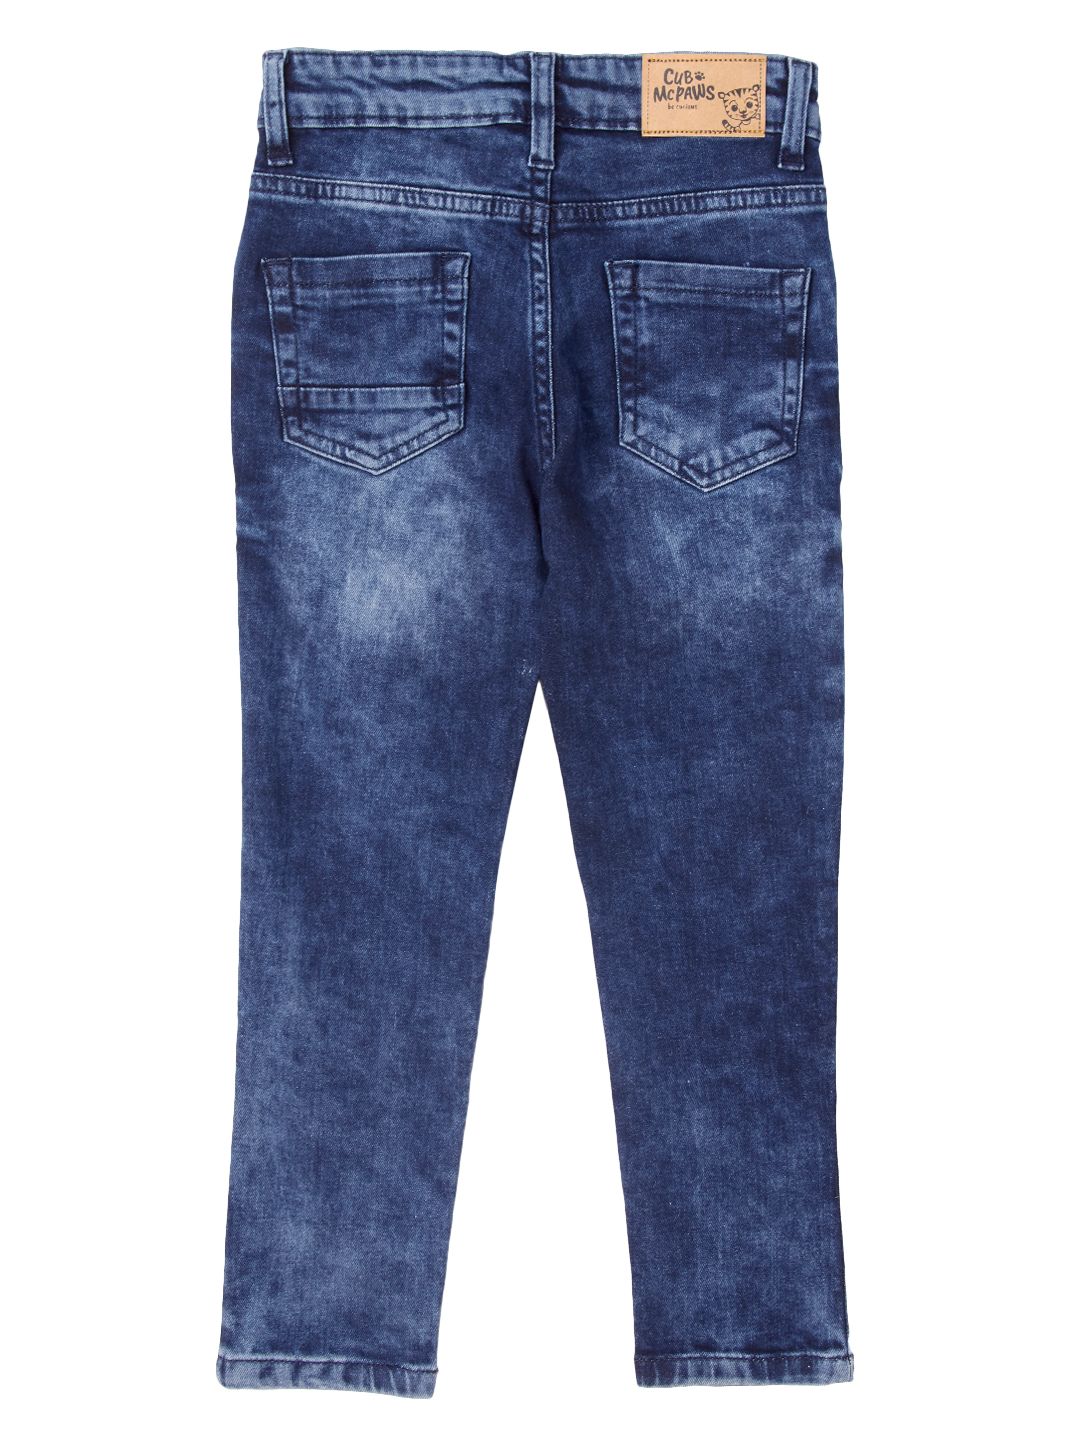 George Regular Straight Denim Jeans Men's 38x29 Blue 5-Pocket Medium Wash  Cotton | eBay